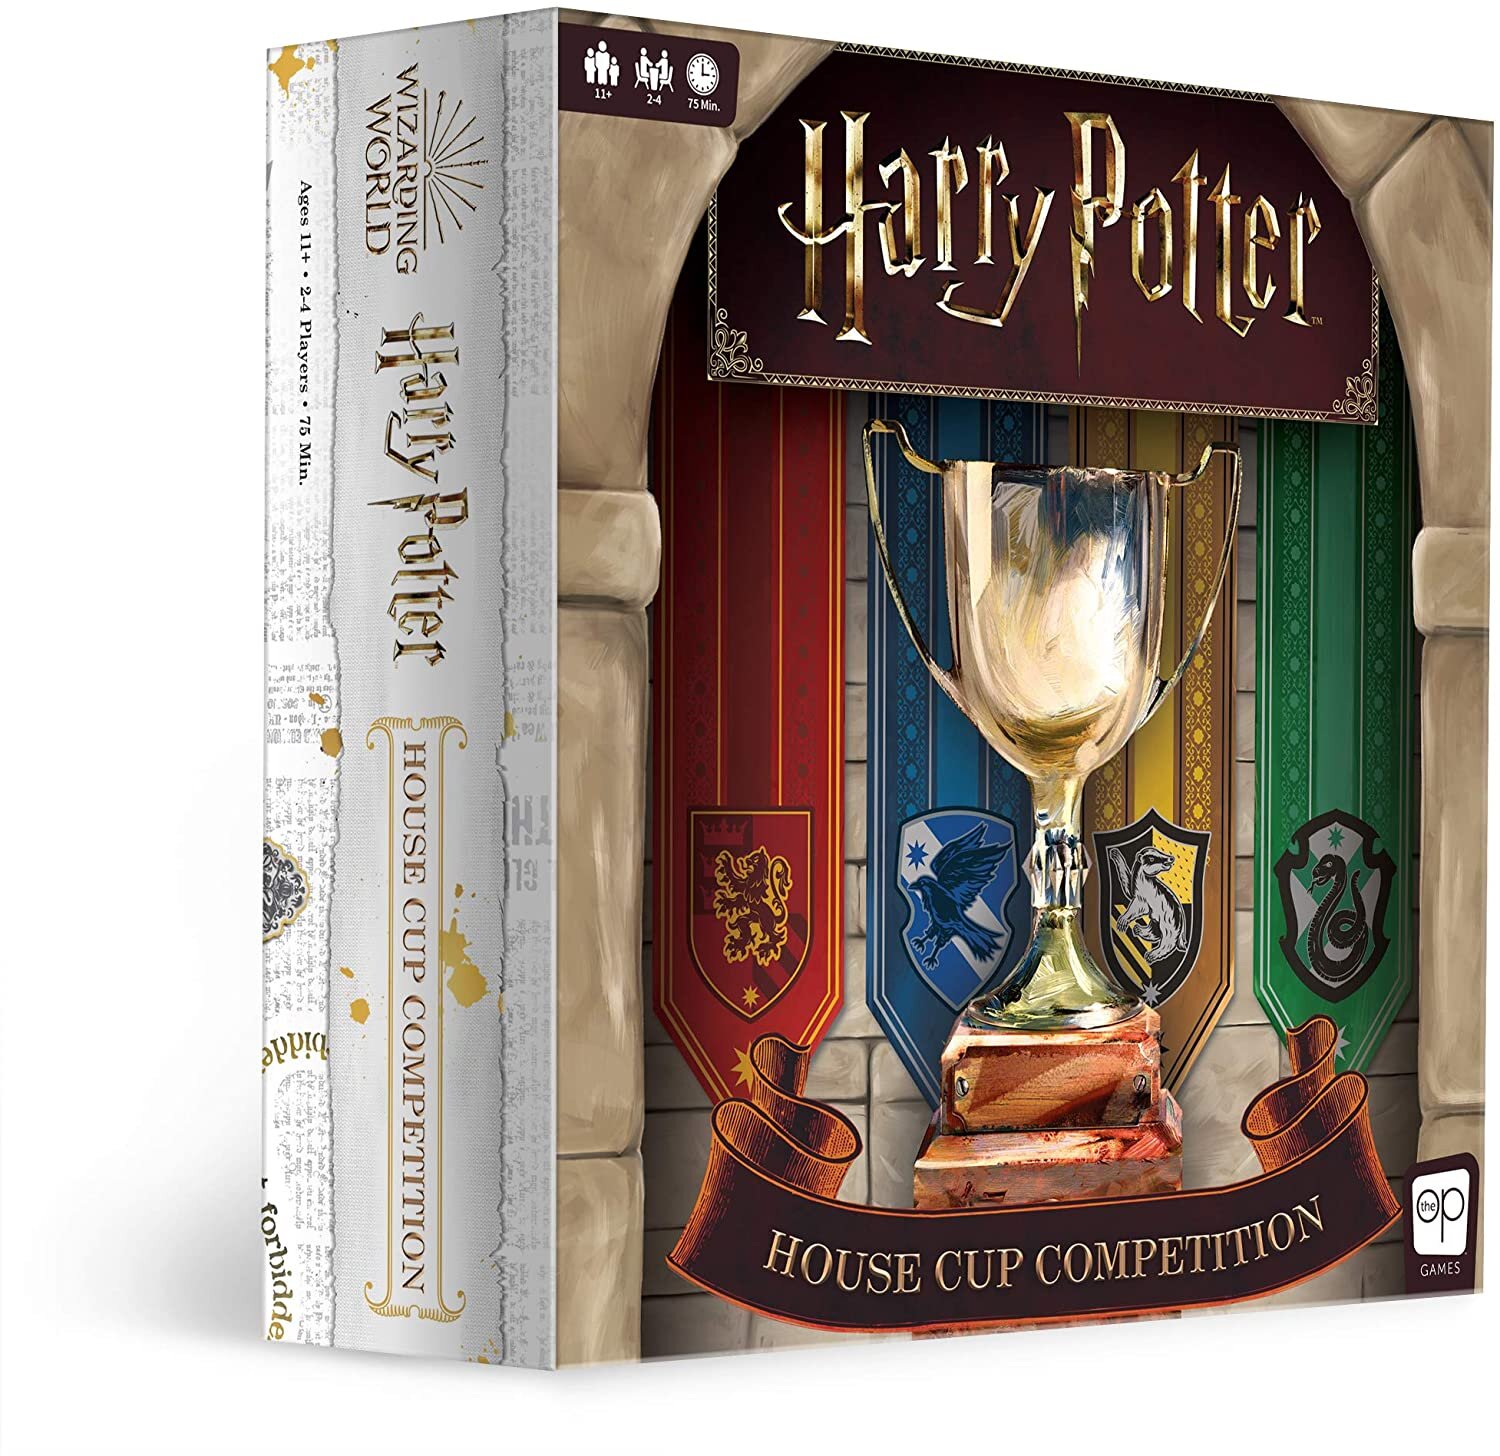 Best Gifts for Harry Potter Fans - Helene in Between